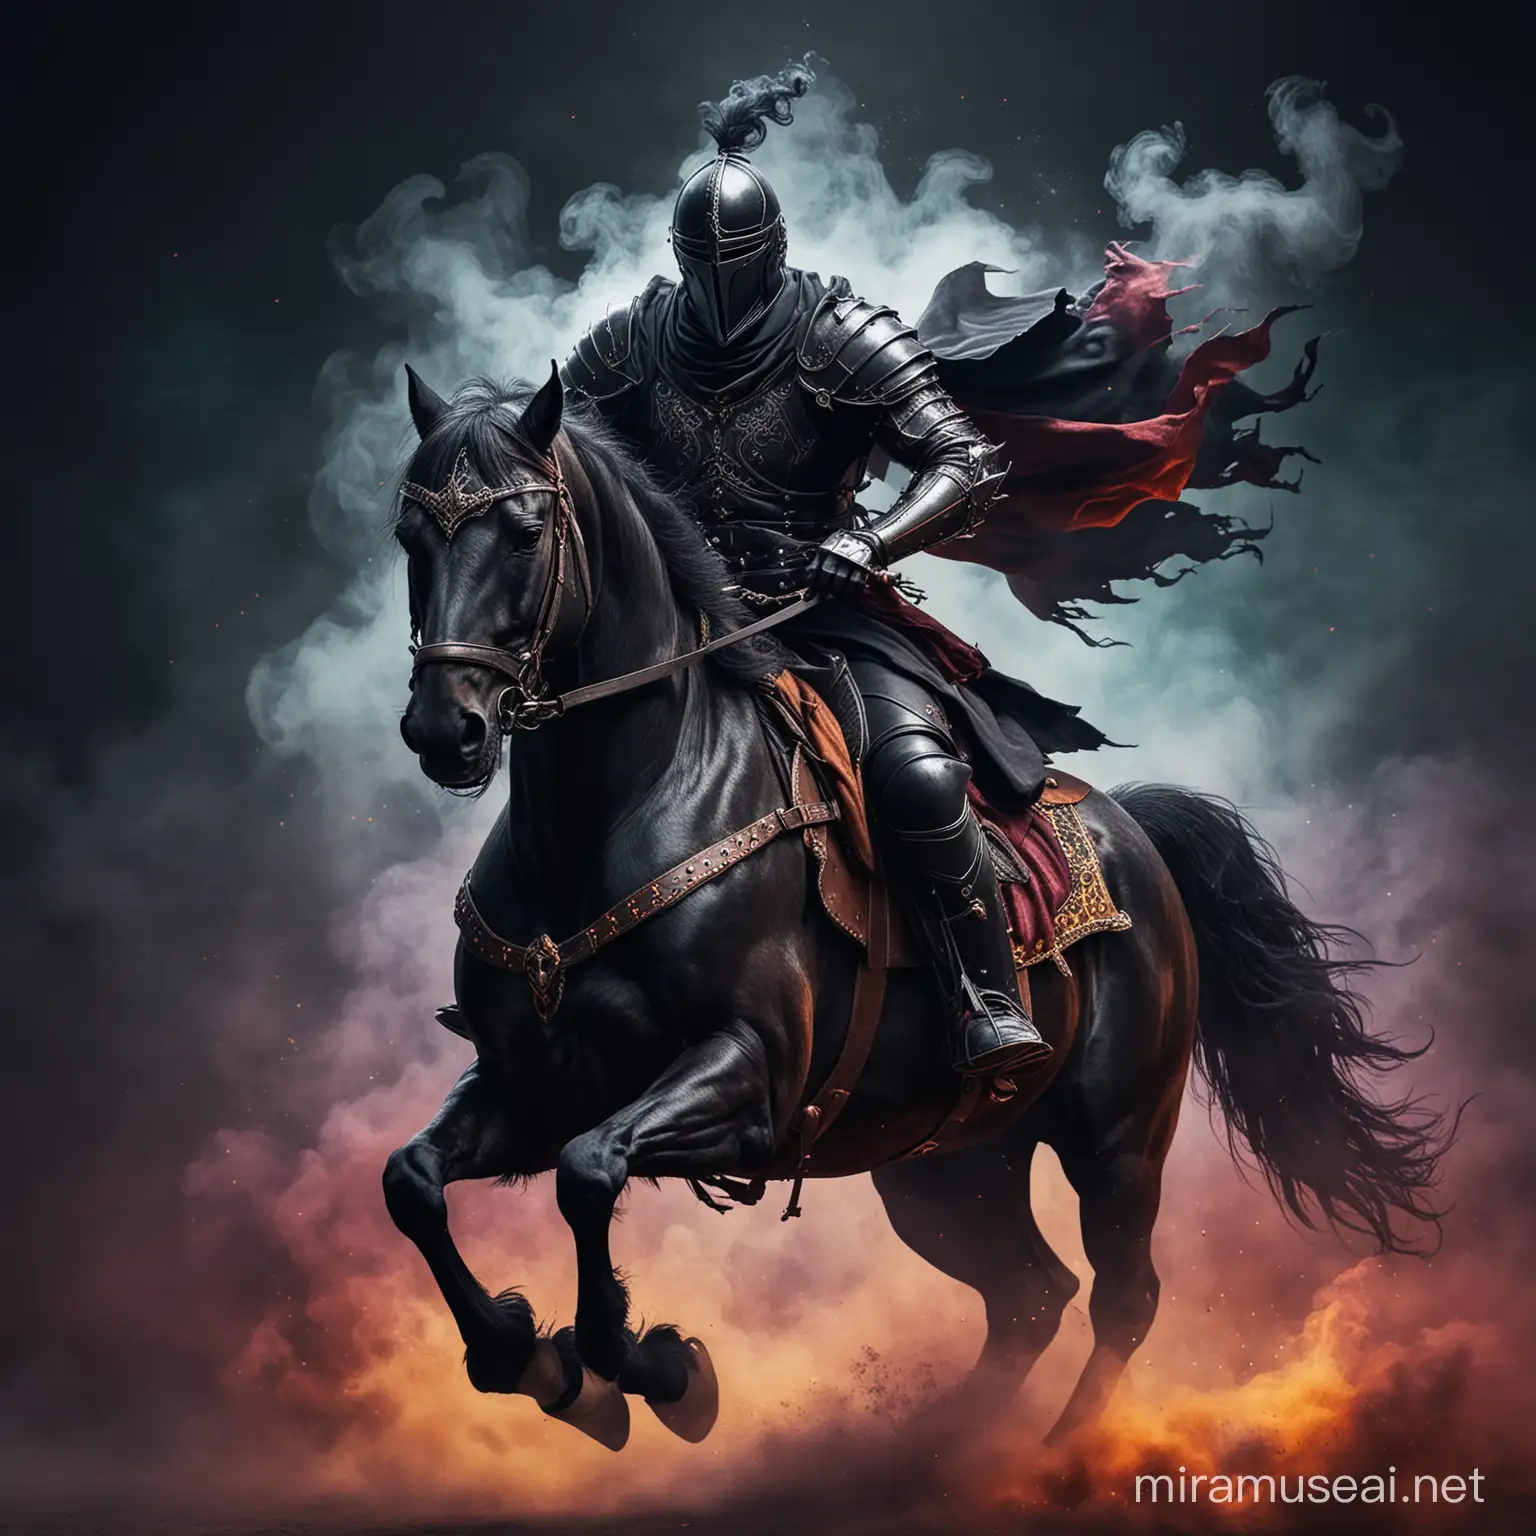 Dark Evil Knight Riding Horse through Colorful Smoke